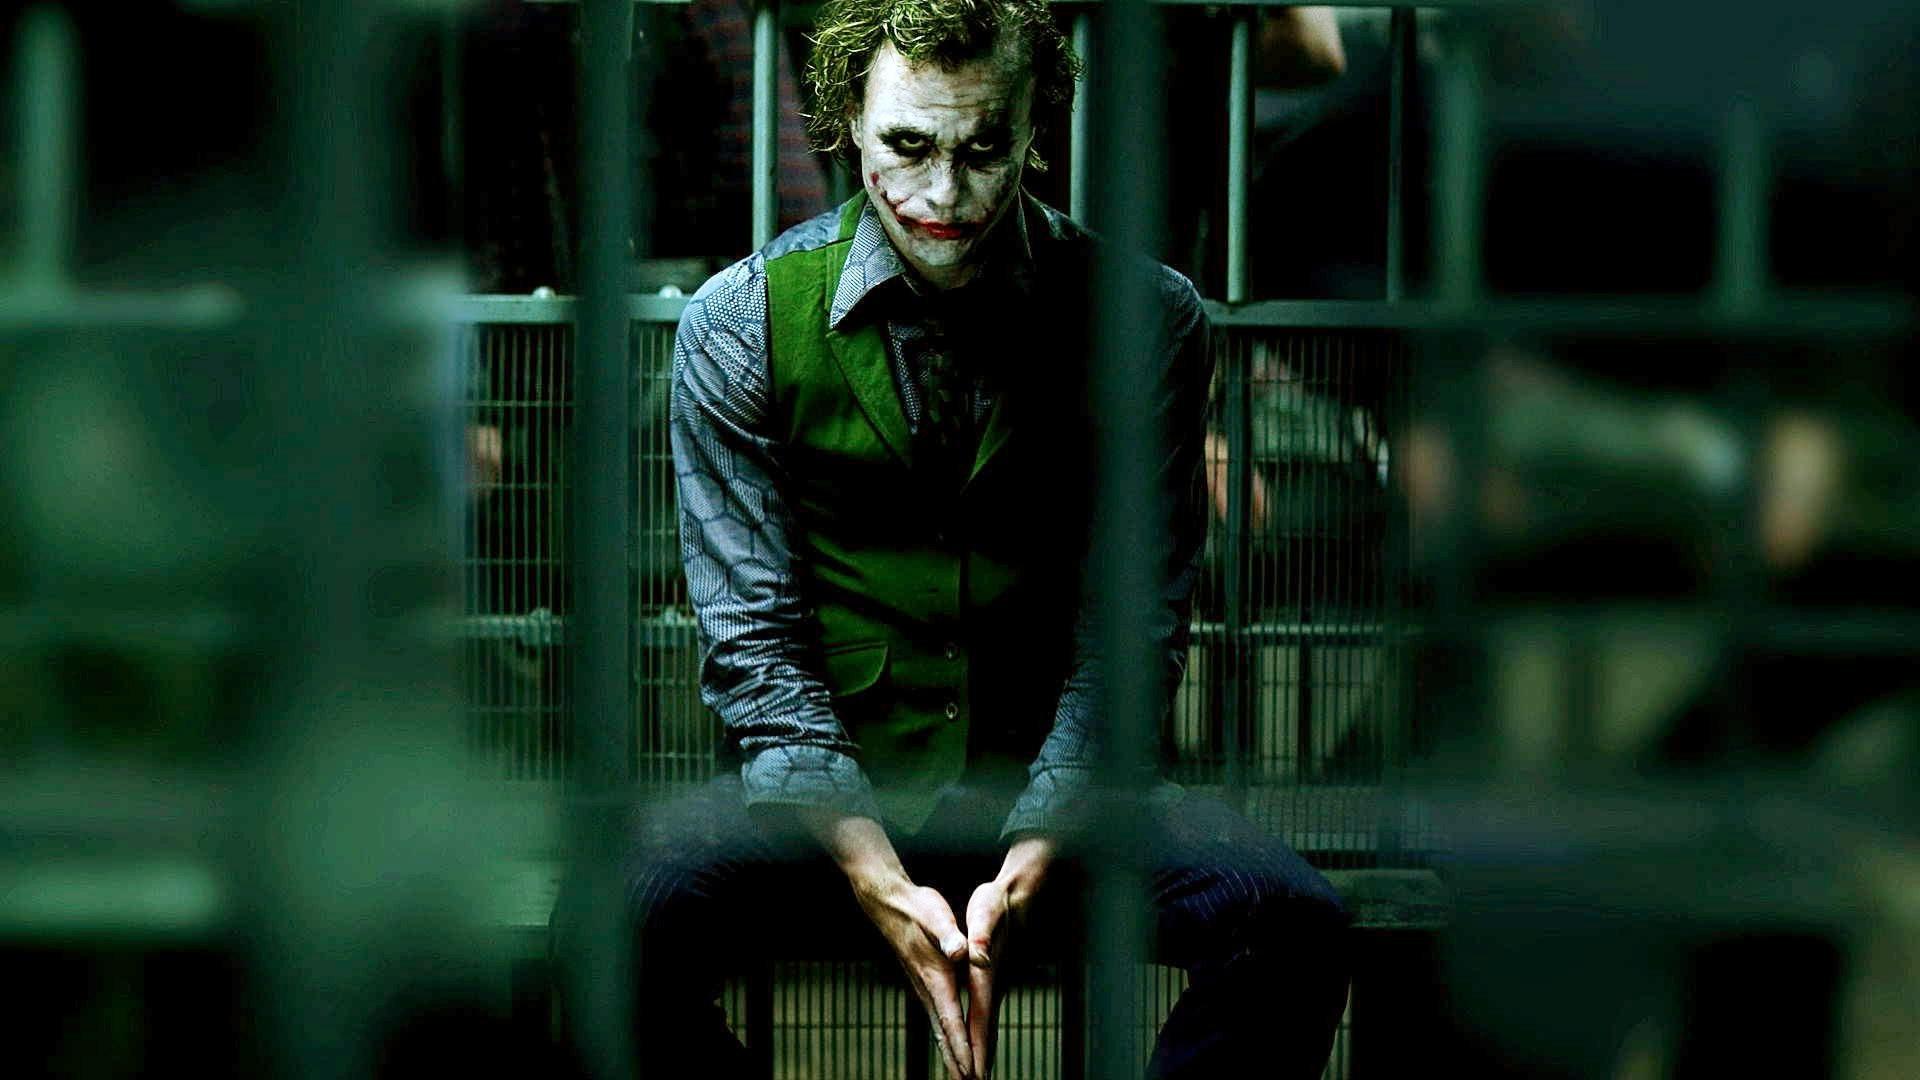 Joker Wallpaper background picture